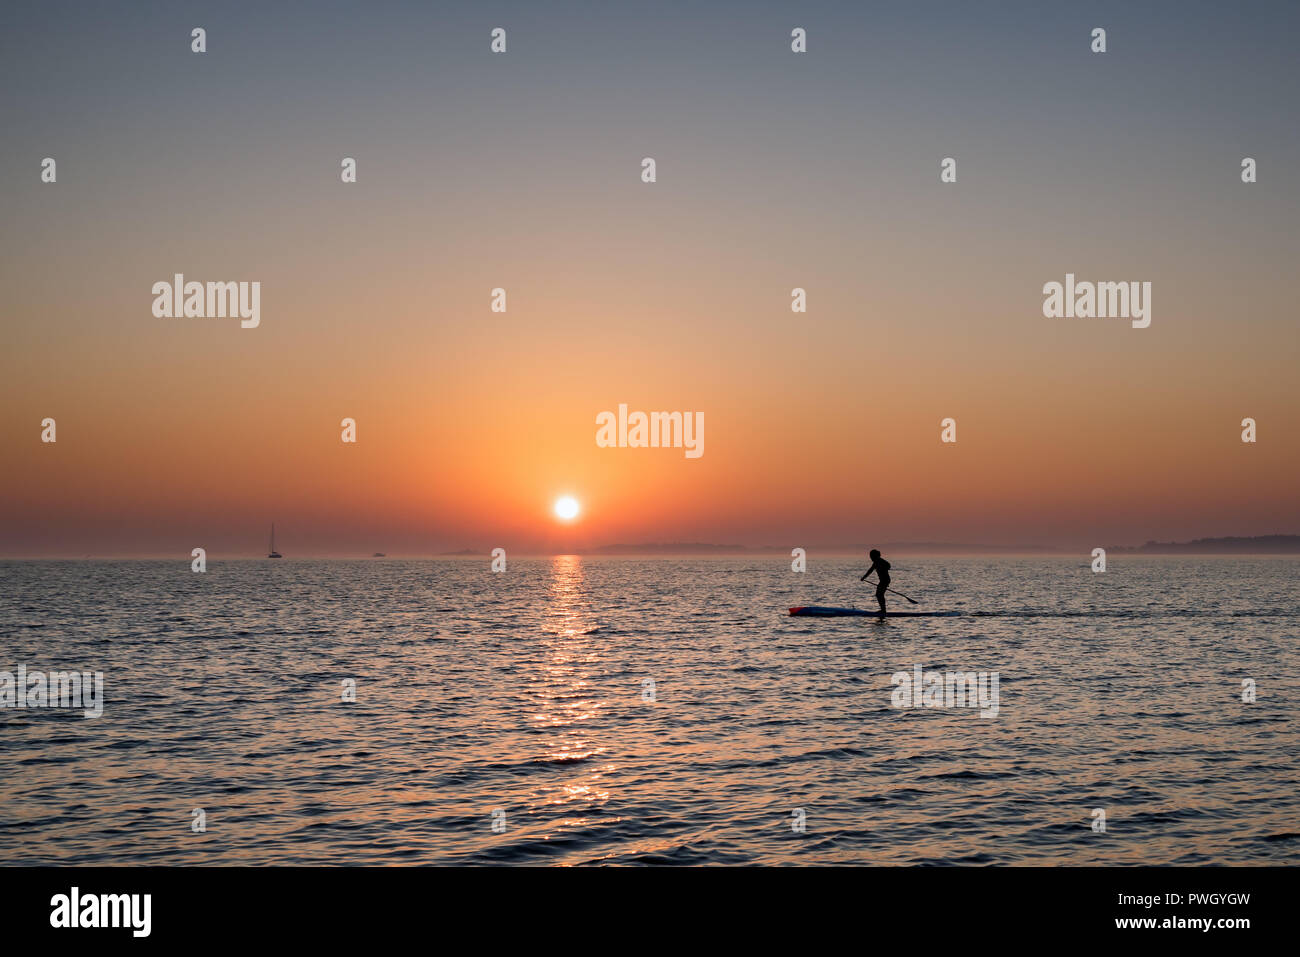 Ulko hattu islet hi-res stock photography and images - Alamy